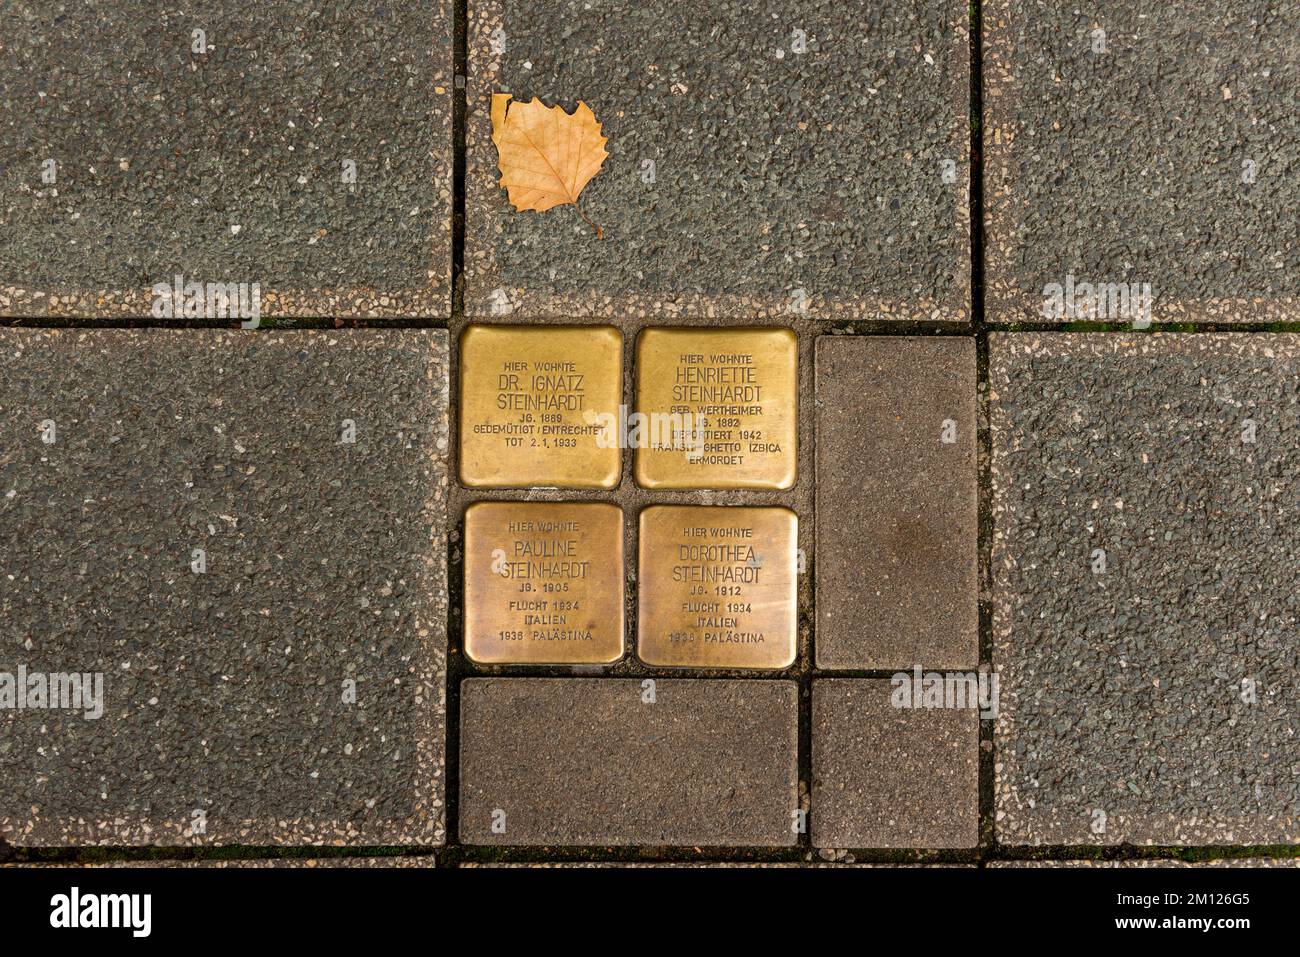 stumbling stone, memorial plaque, Nuremberg, art object, street pavement Stock Photo